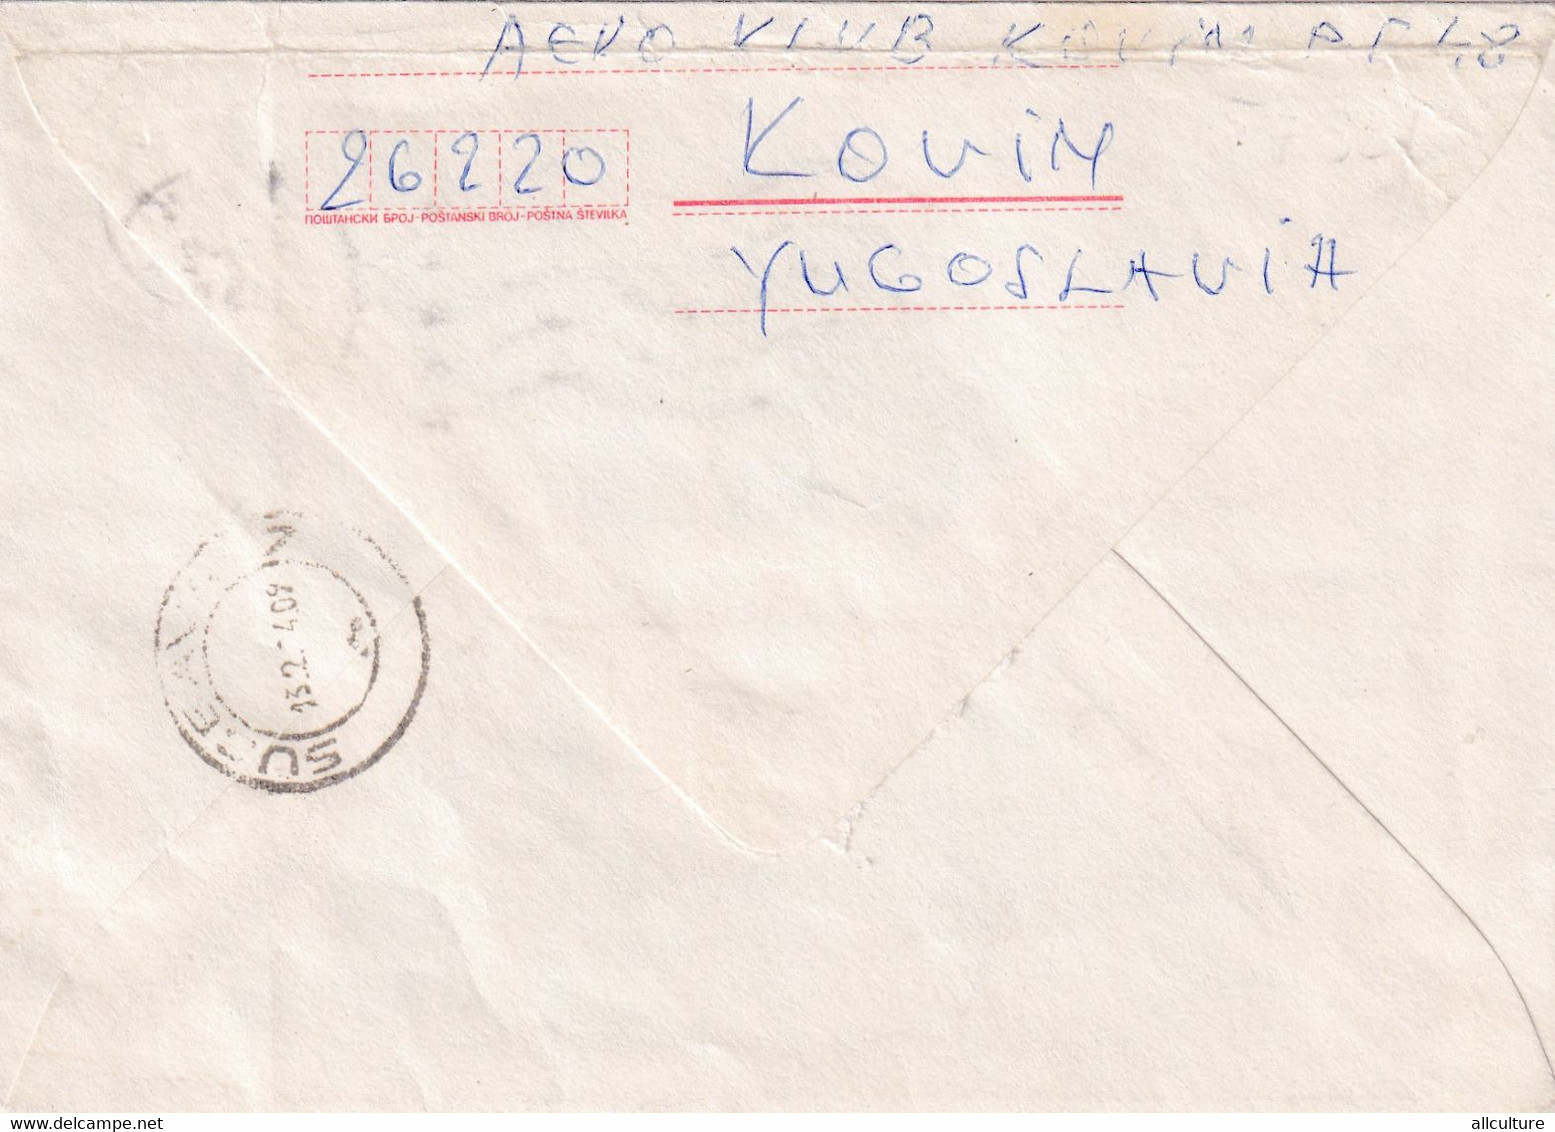 A2809-  Cover From Kovin 1984 Jugoslavia Slovakia , Postal Stationery To Suceava Romania 1984 - Briefe